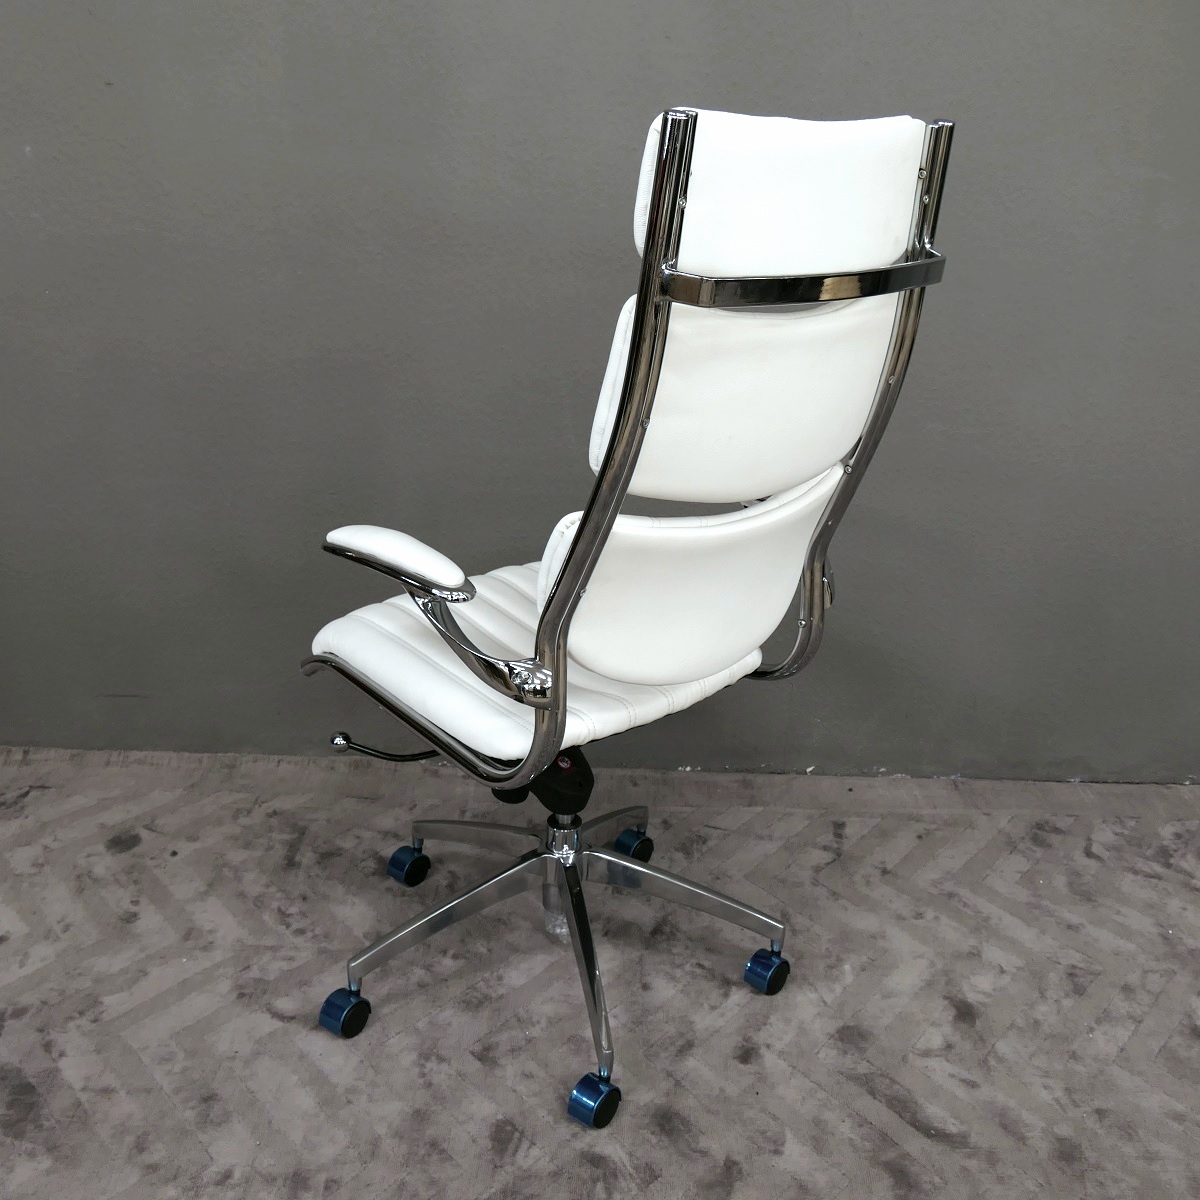 Bürosessel Stuhl Stühle Chefsessel Schreibtischstuhl Sessel Leder Farbe: weiss